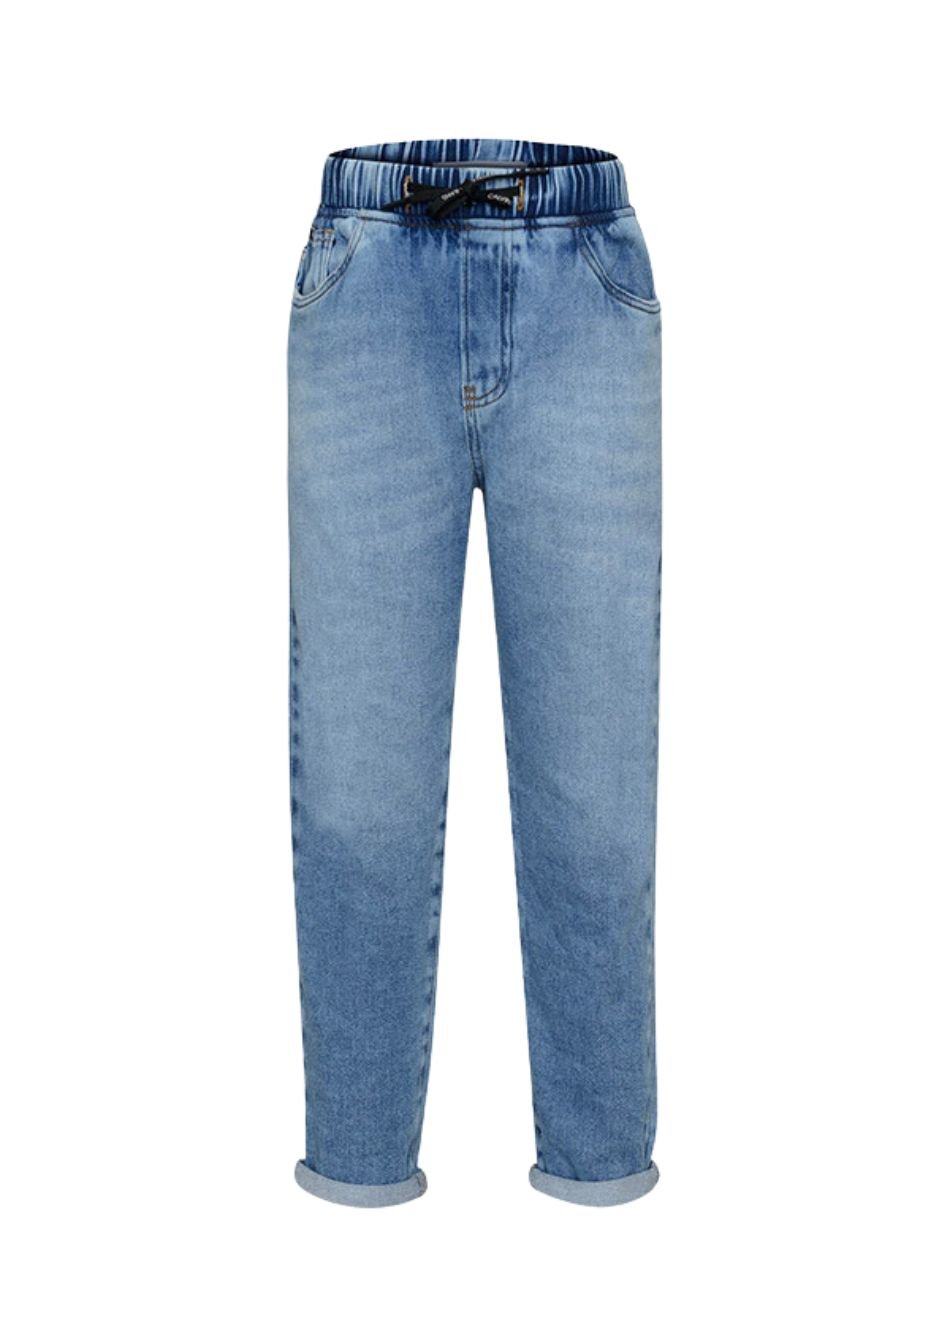 Calça Jeans Calvin Klein Infantil Taper Cadarço Cós